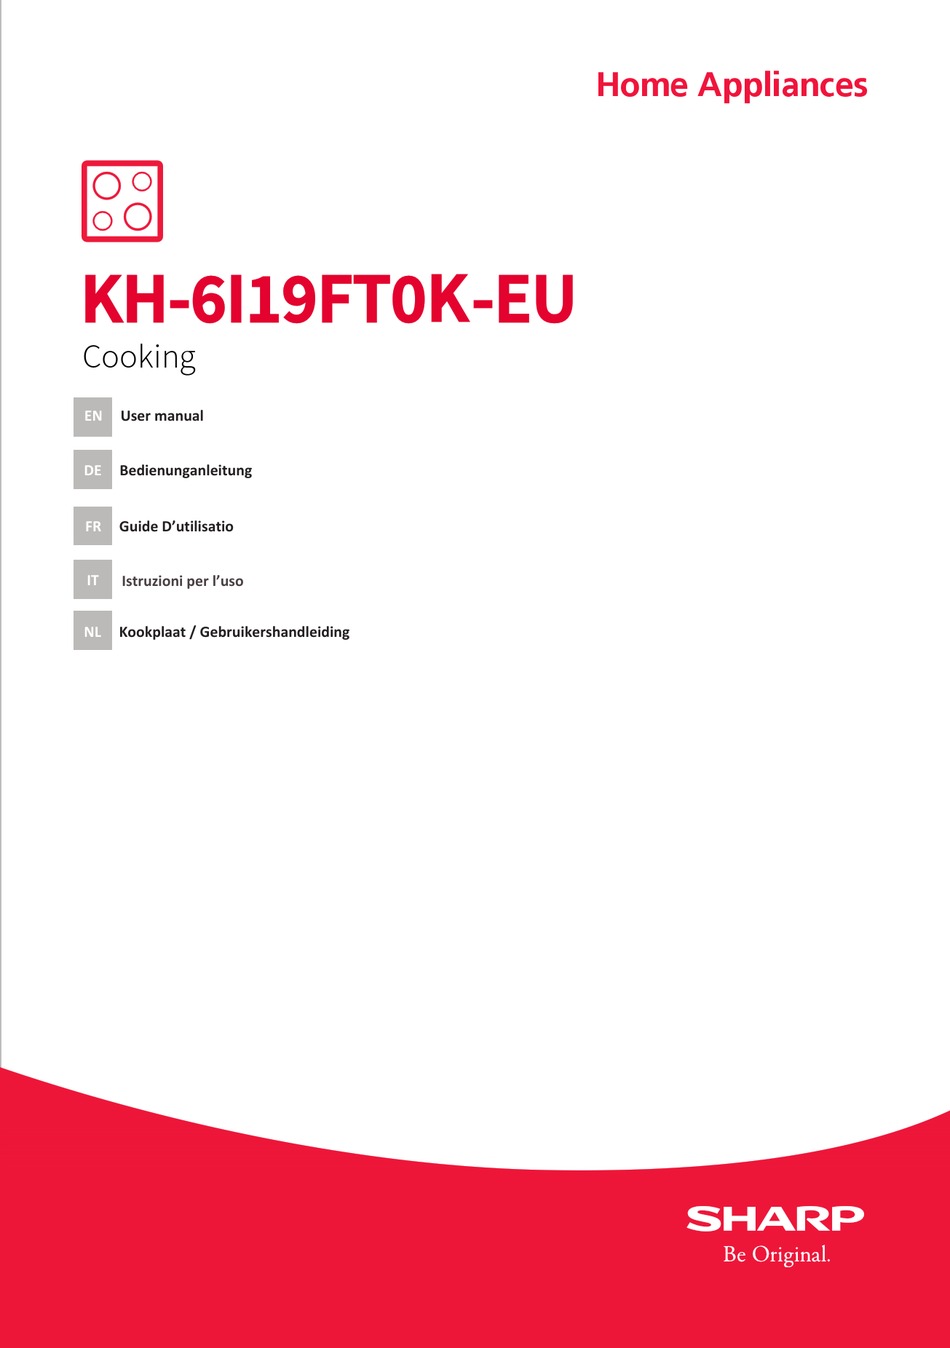 Sonderangebotskatalog SHARP KH-6I19FT0K-EU USER MANUAL Pdf ManualsLib | Download